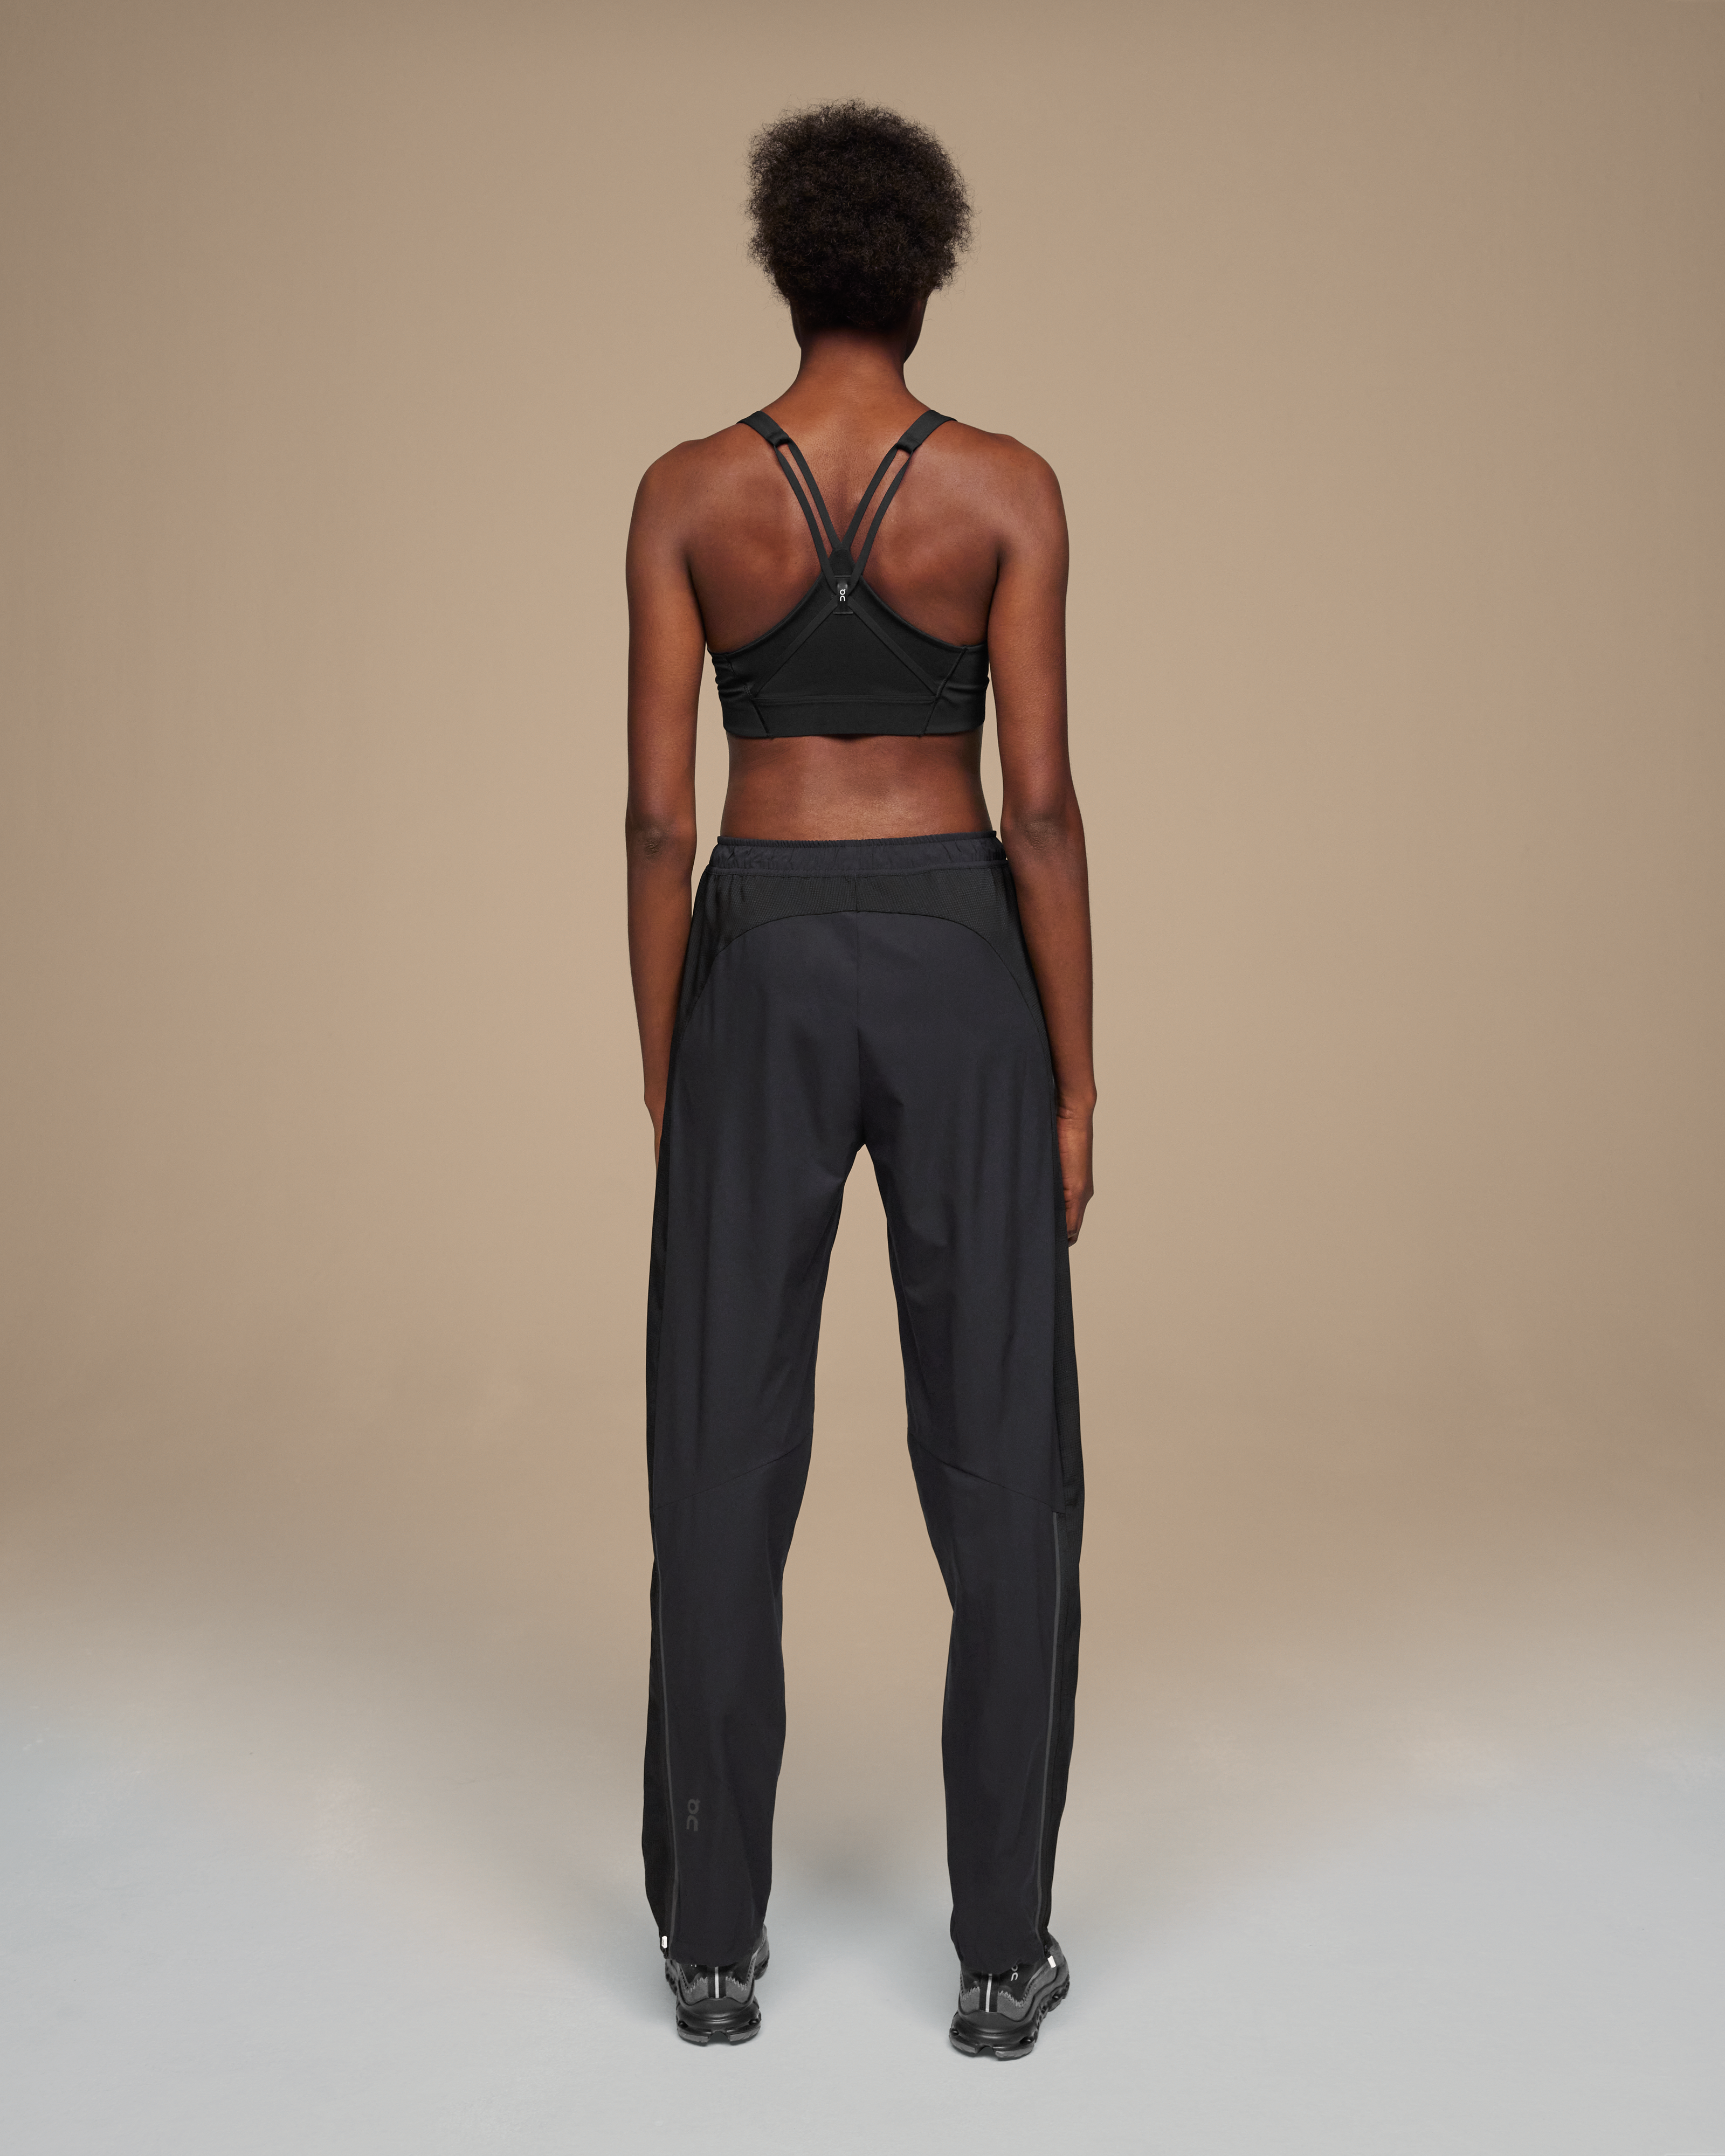 Buy Activewear Trackpants For Women Online - Monte Carlo